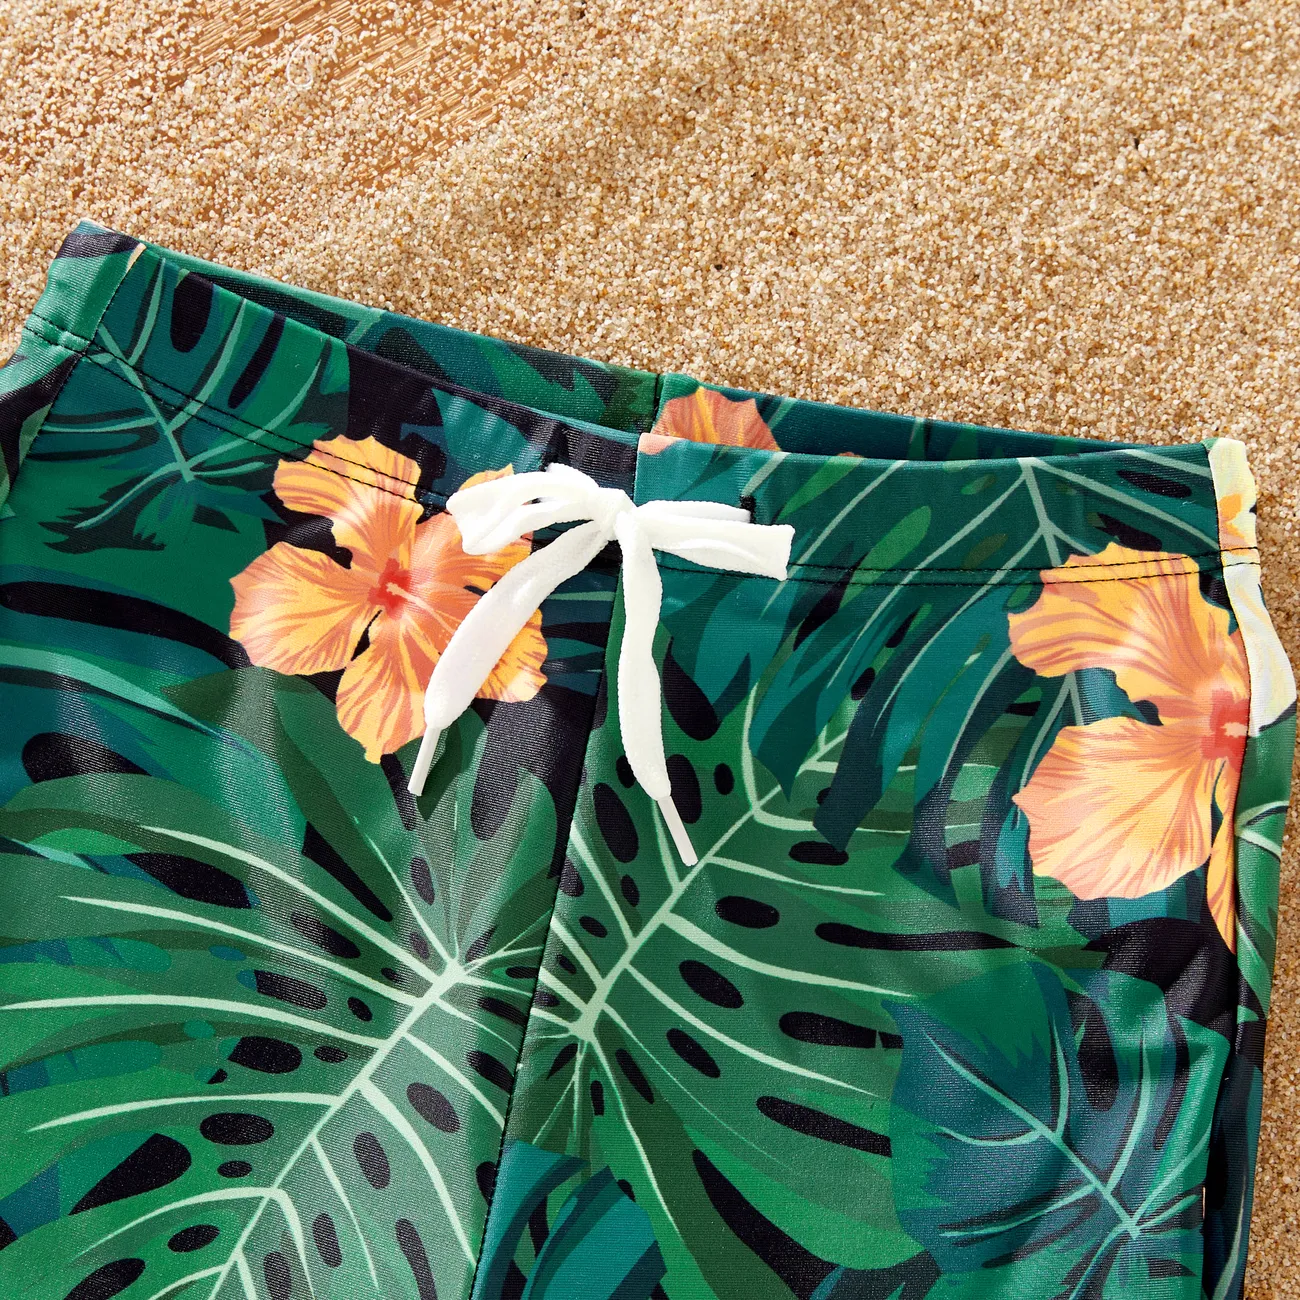 Family Matching Floral Drawstring Swim Trunks or Scalloped Trim Two-Piece Strap Swimsuit Orange big image 1